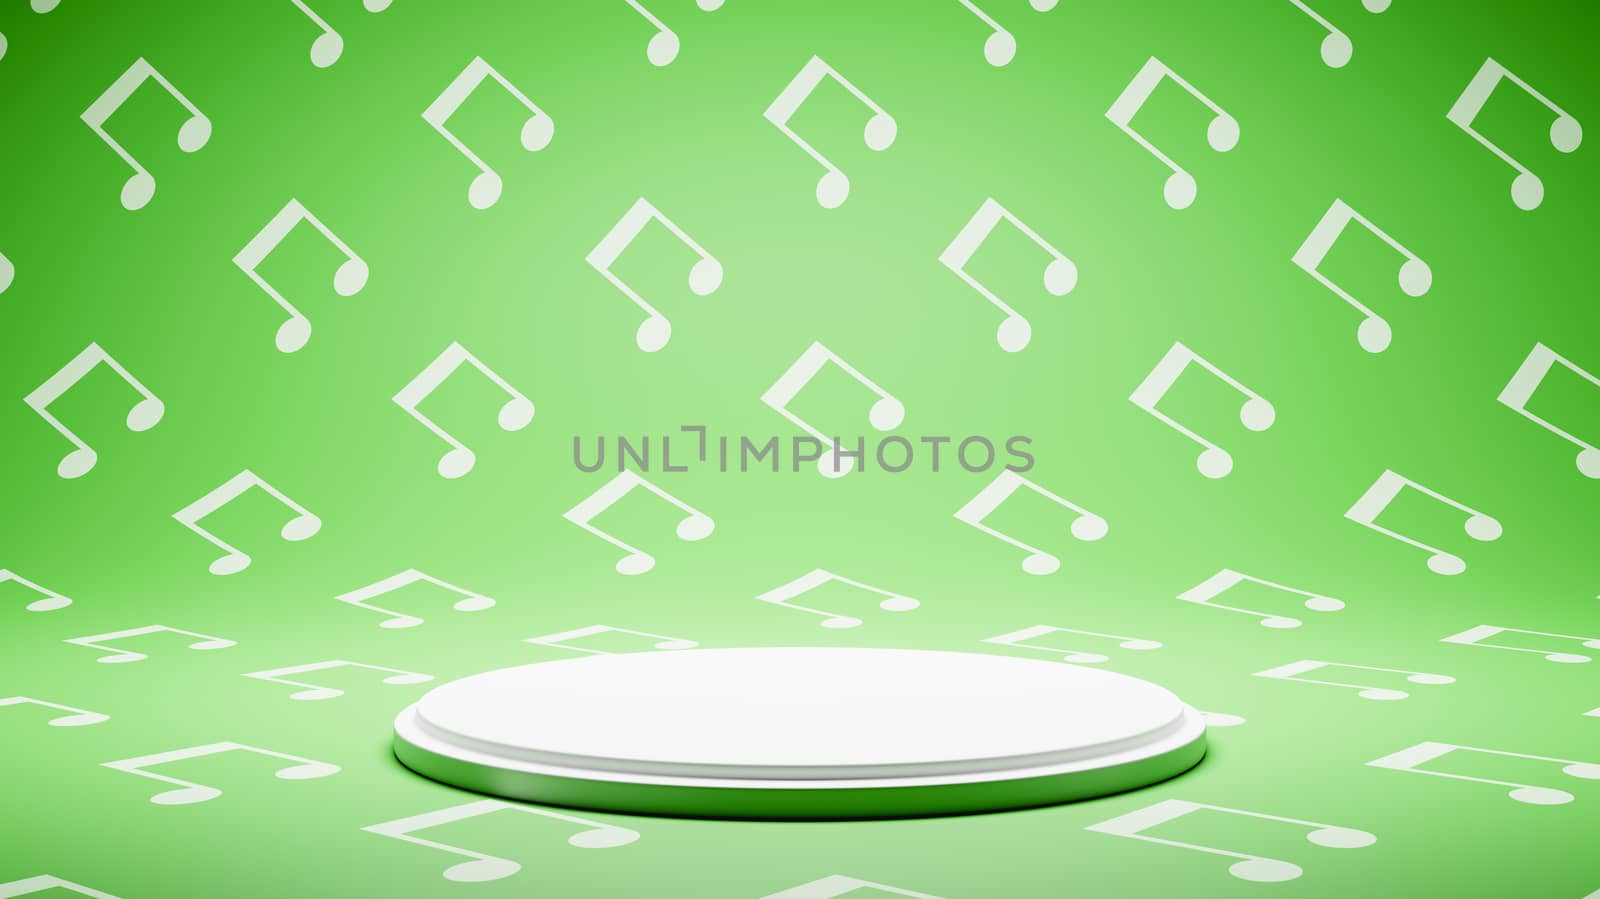 Empty White Platform on White and Green Musical Notes Shape Pattern Studio Background 3D Render Illustration